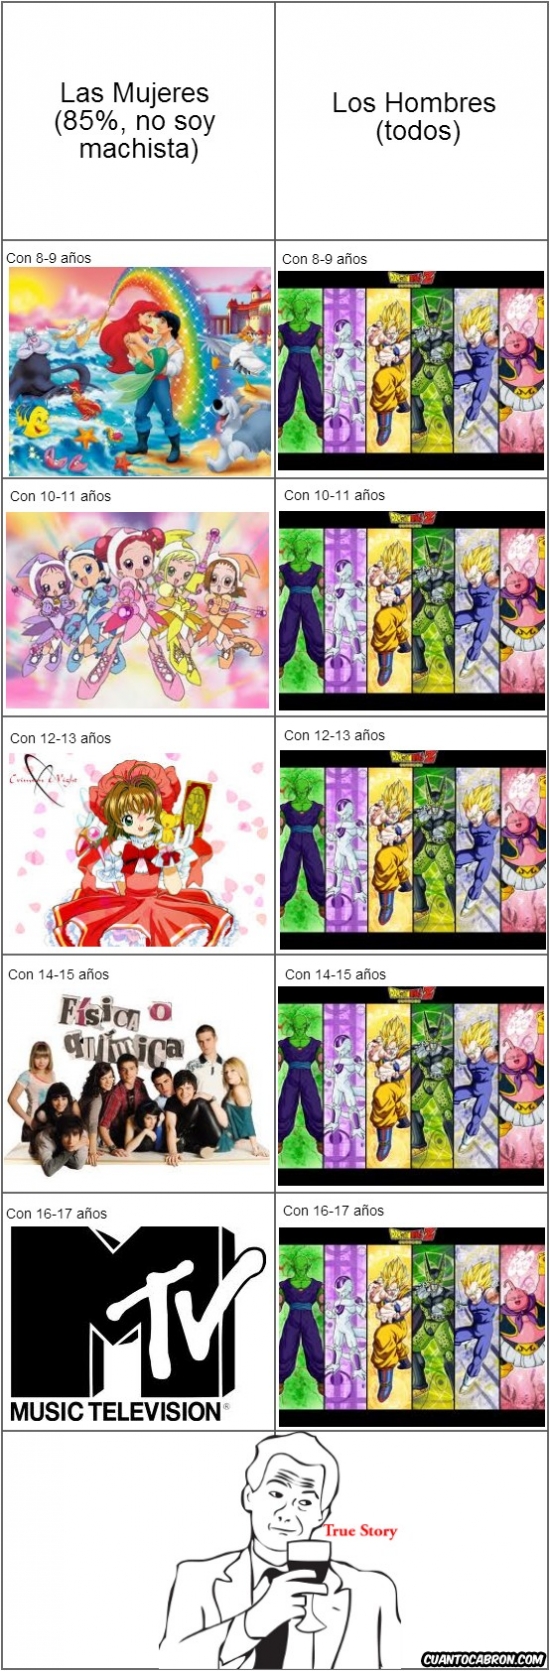 Do-Re-Mi,Dragon Ball Z,Física o Quimica,La Sirenita,MTV,Sakura,True story